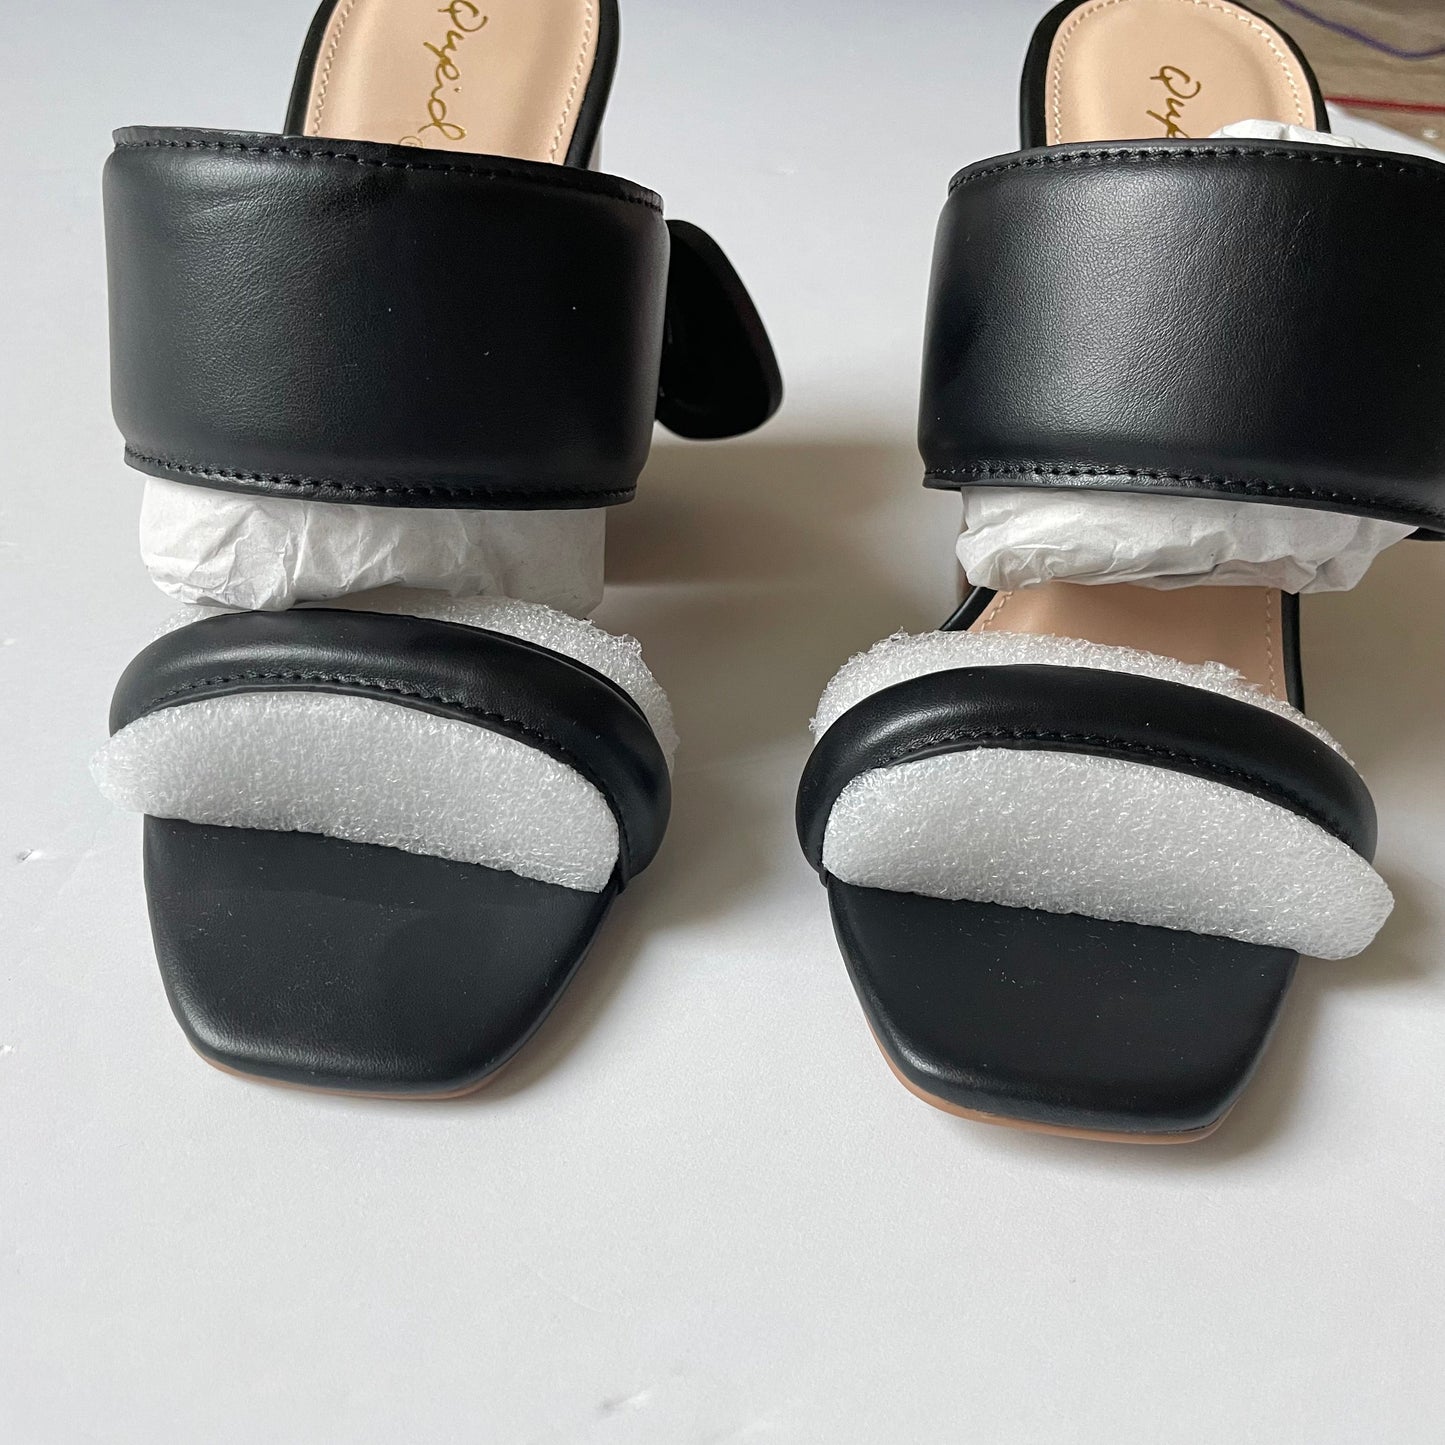 Black Shoes Heels Block Qupid, Size 8.5